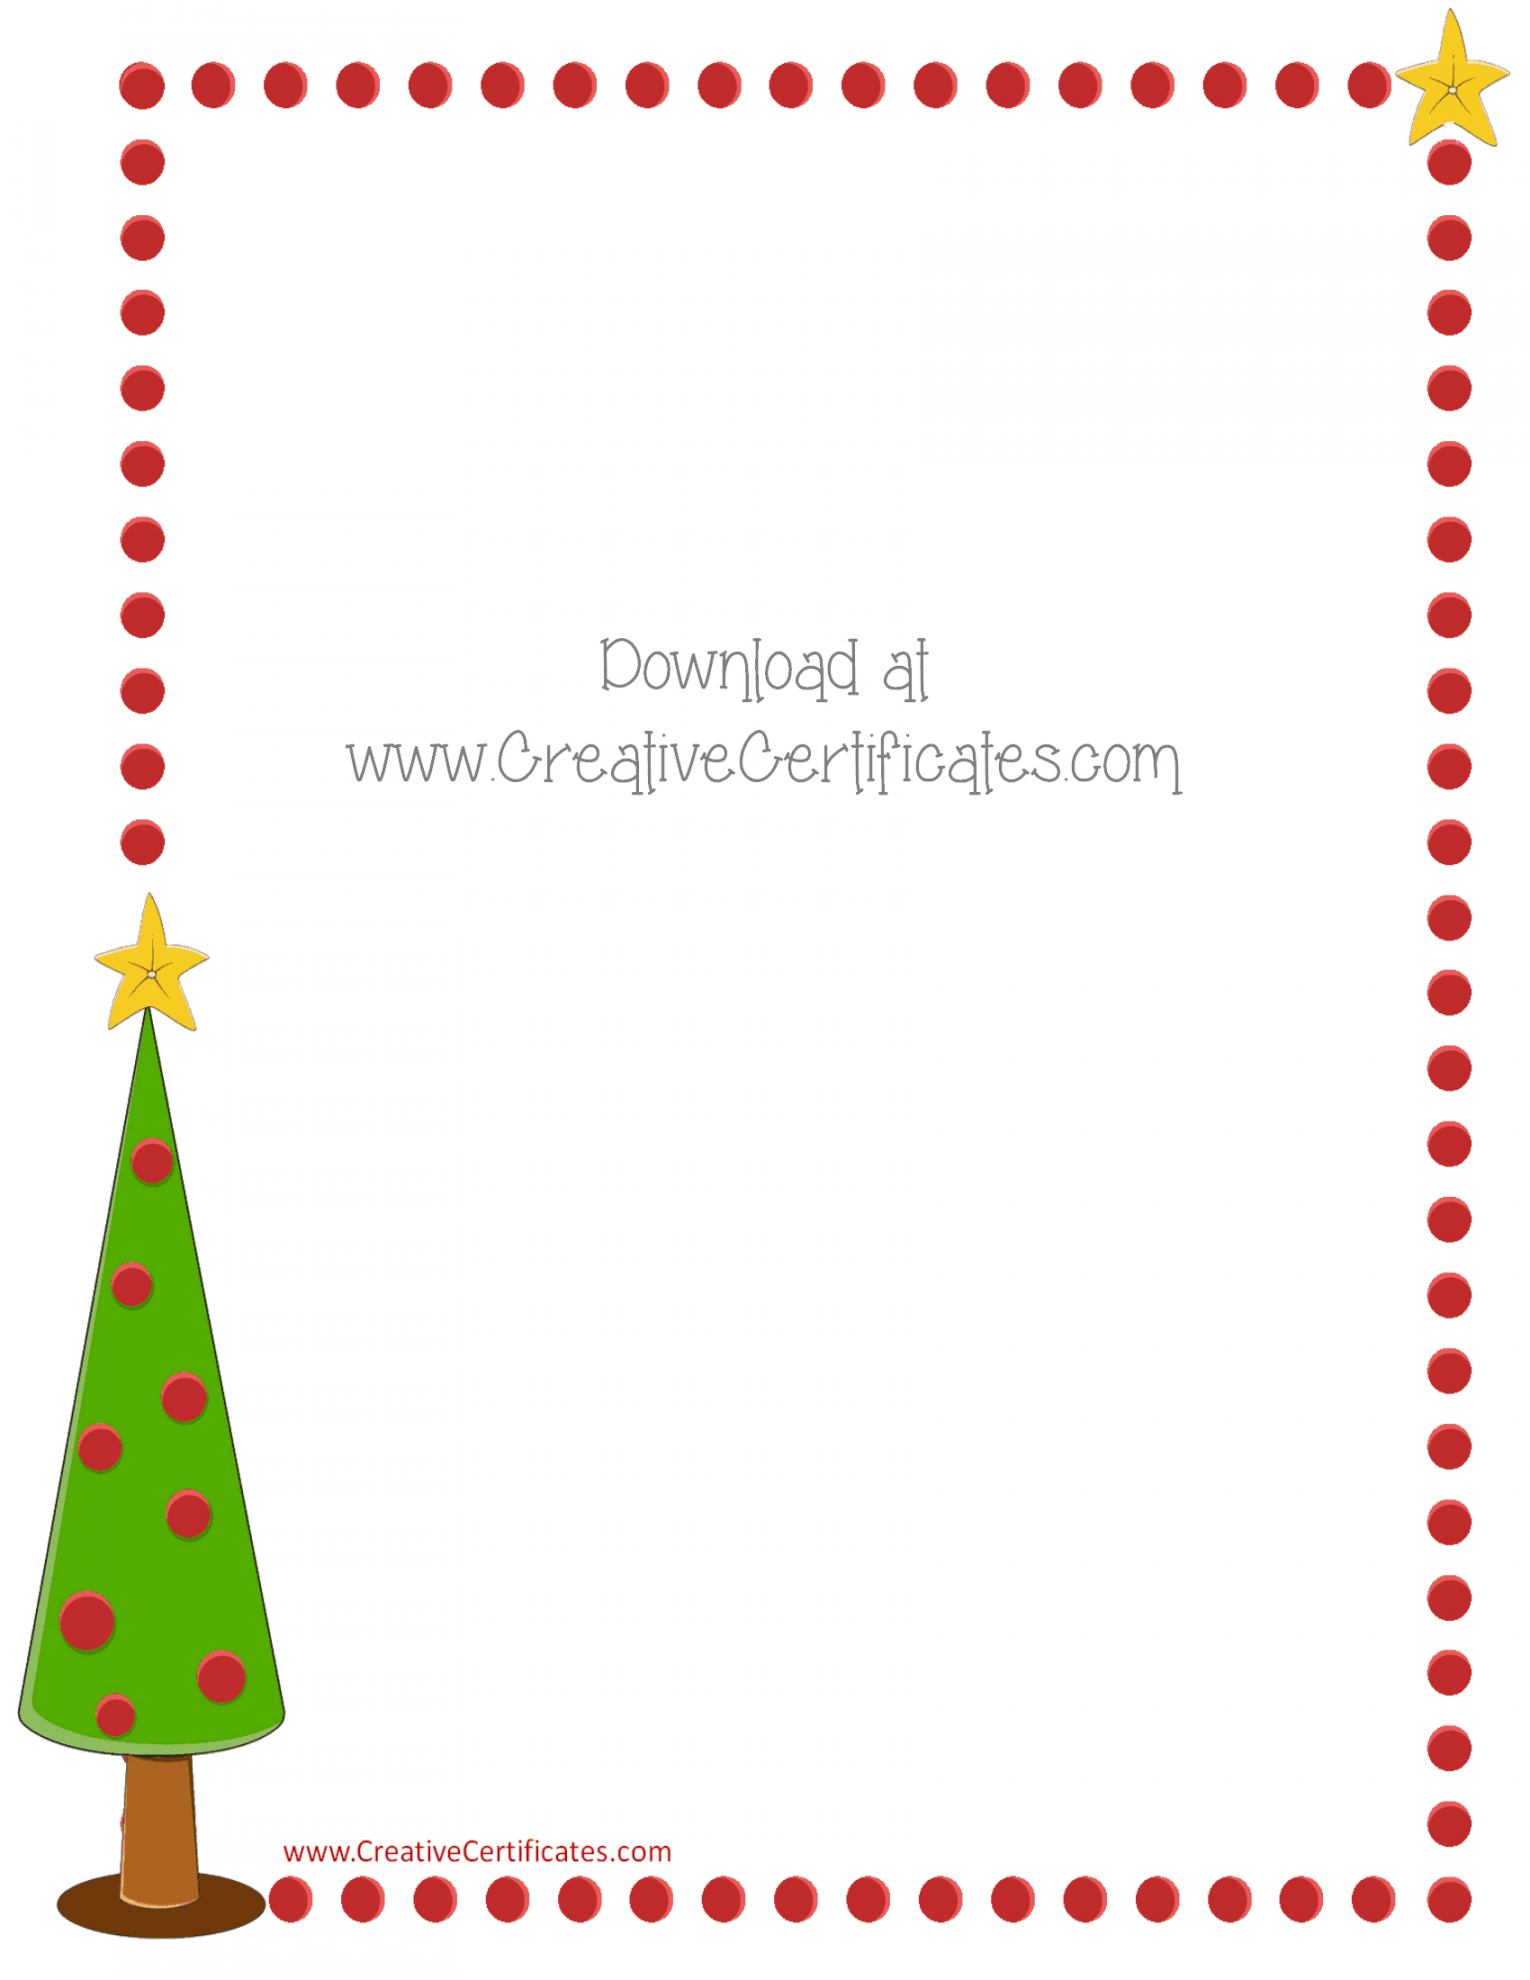 Free Christmas Border Templates - Customize Online then Download - FREE Printables - Free Printable Christmas Borders